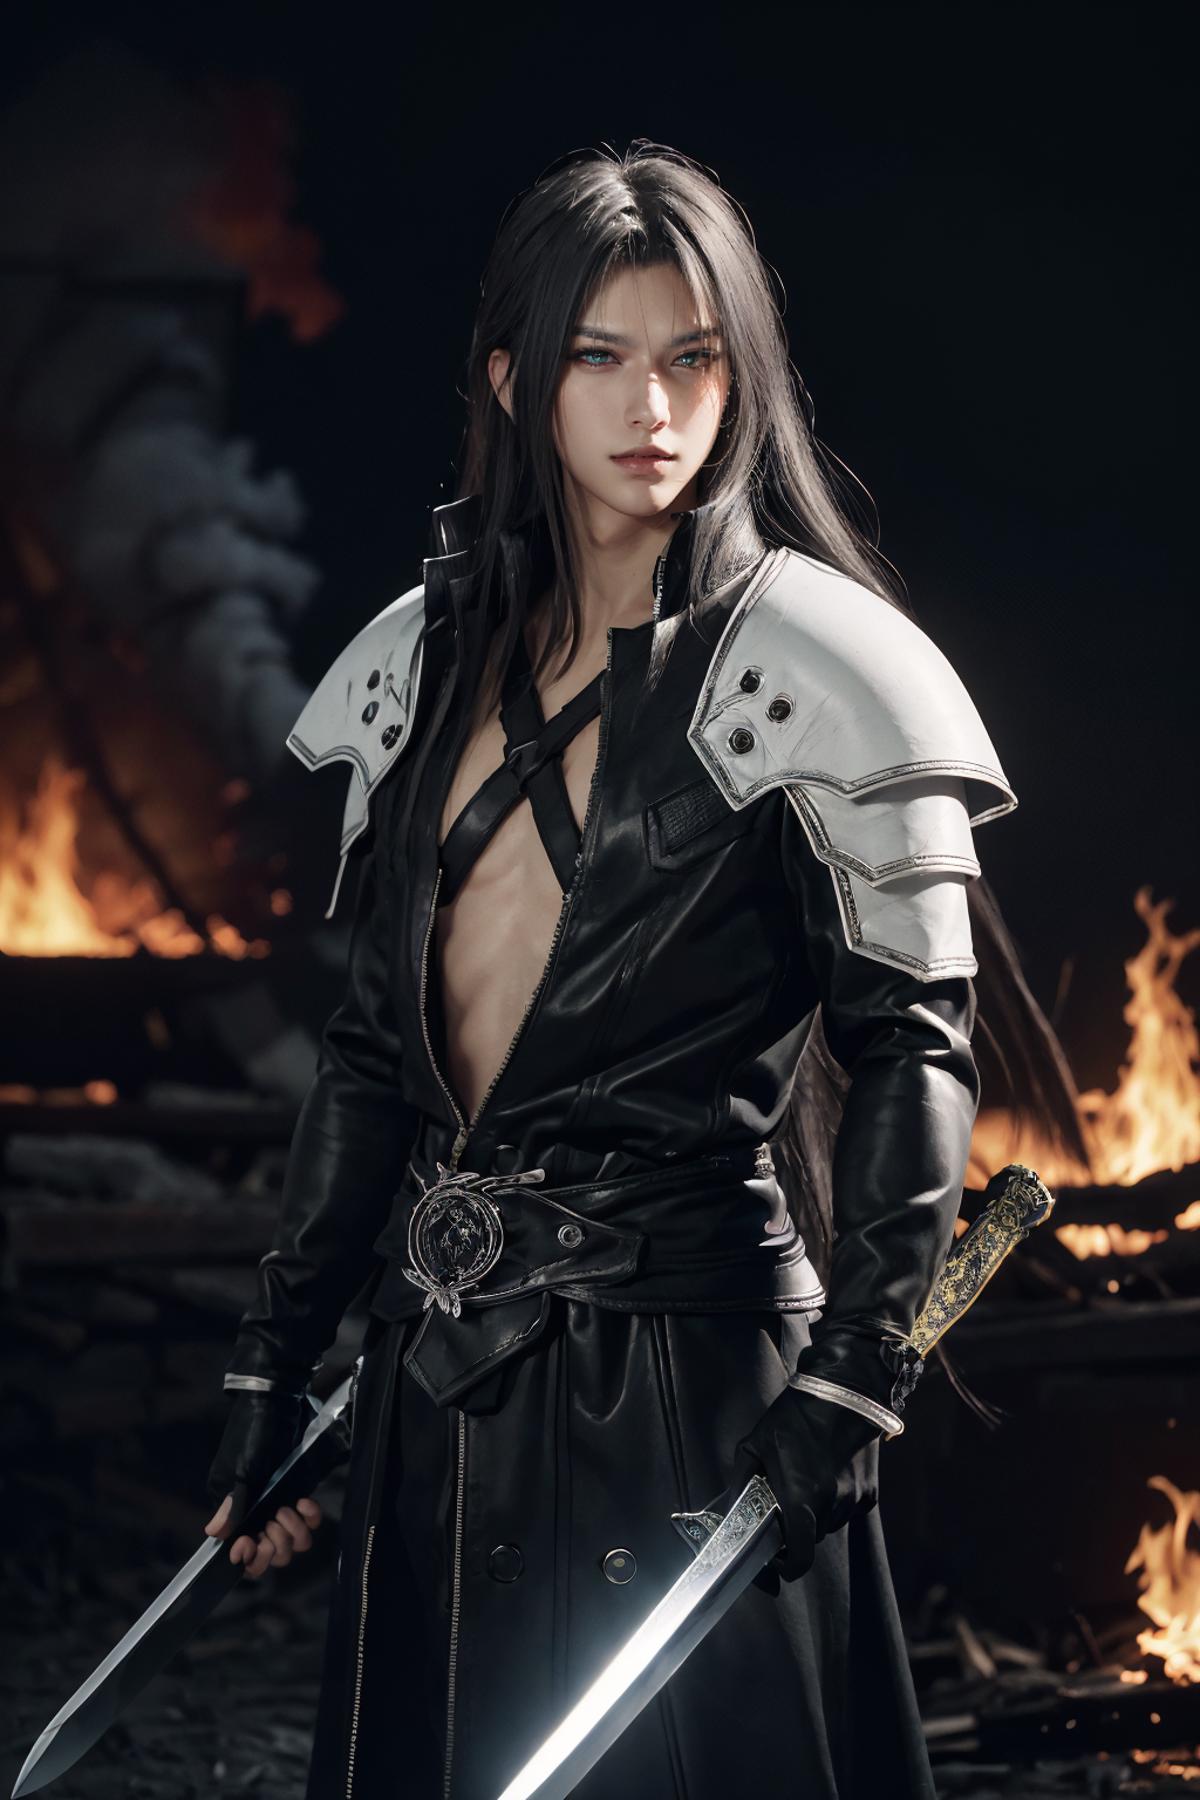 Character - Sephiroth - Final Fantasy VII Remake image by 0_vortex